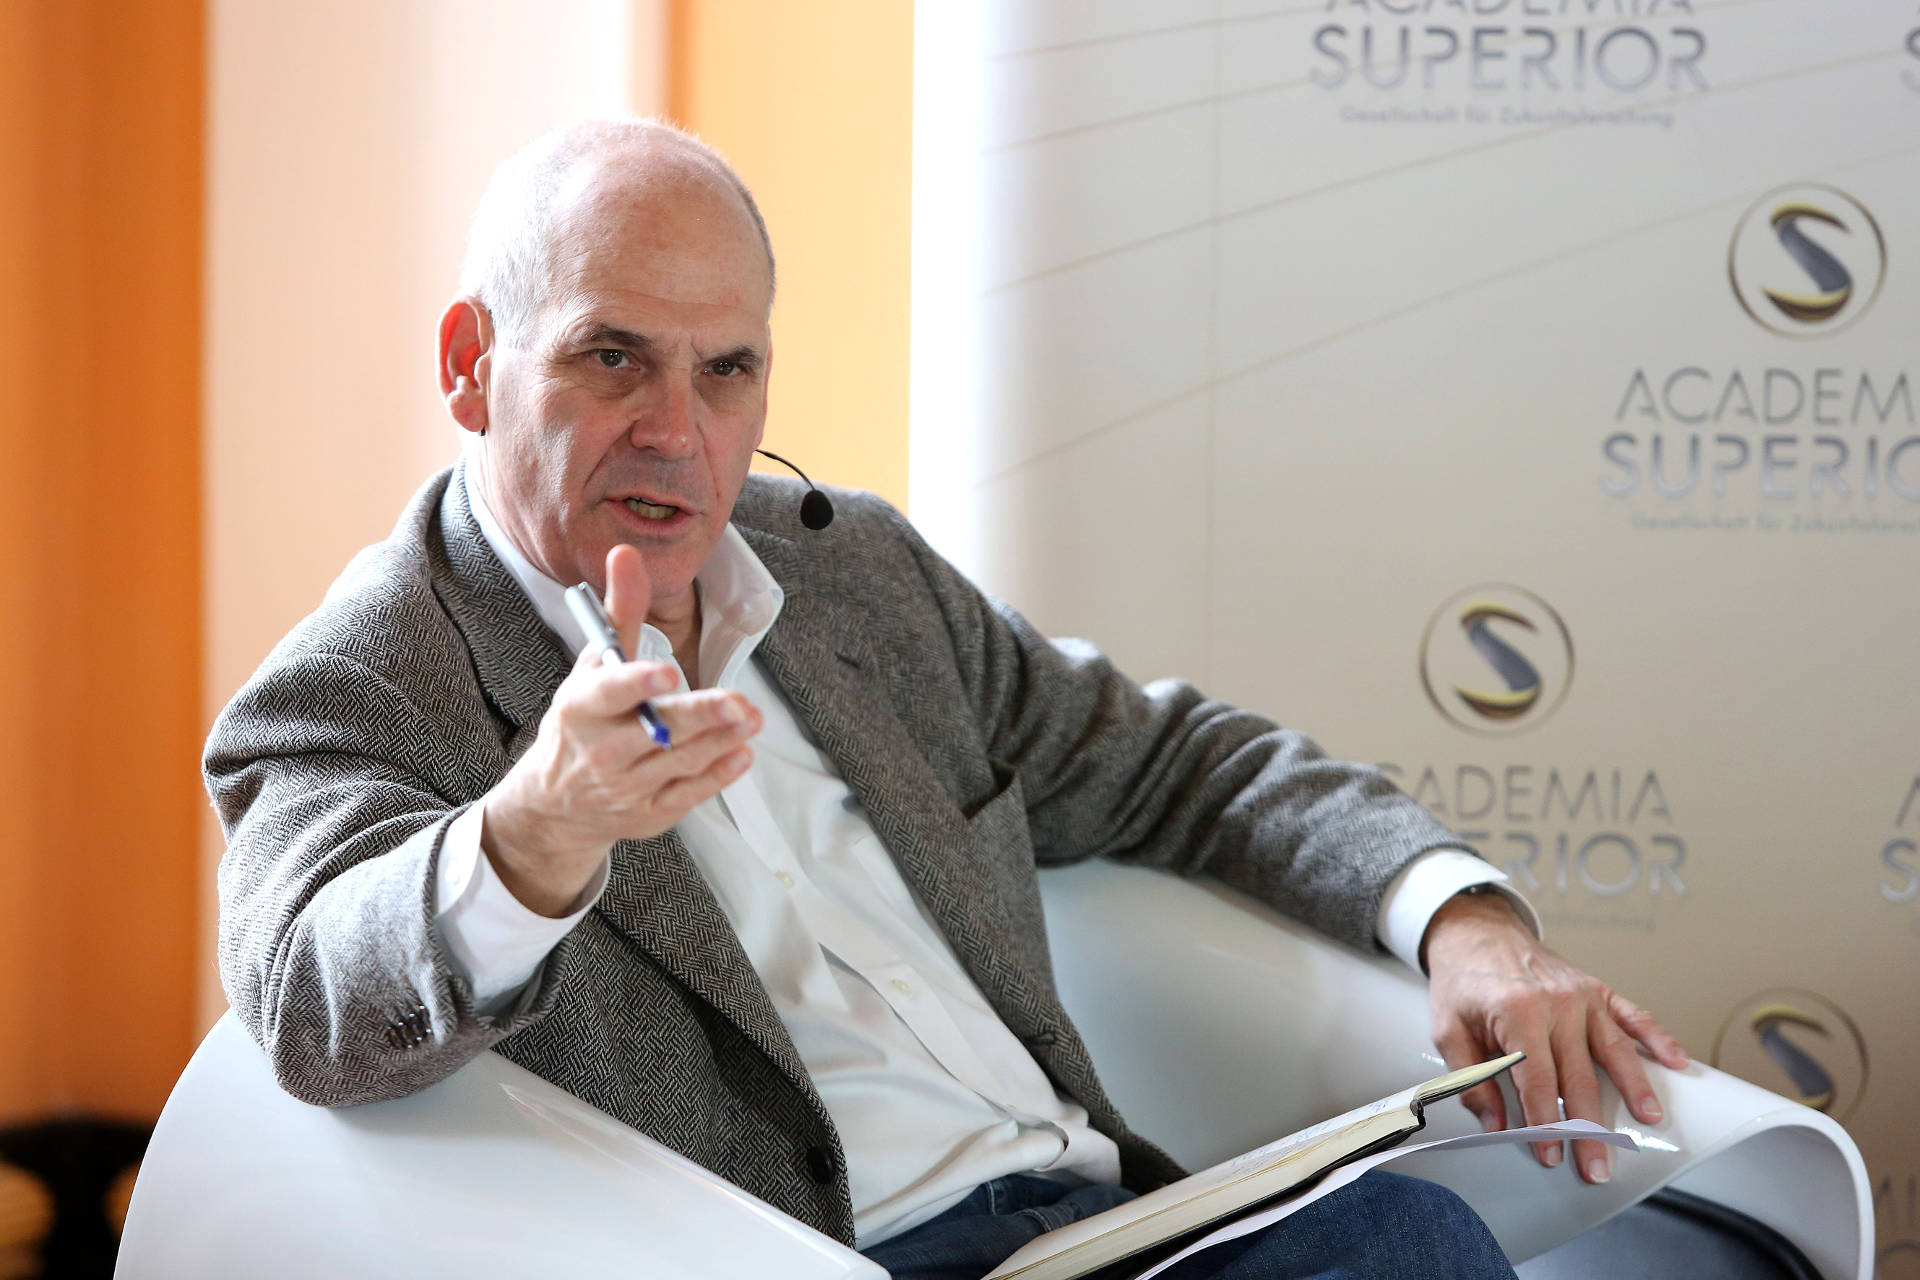 Alan Webber at the  Symposium 2014